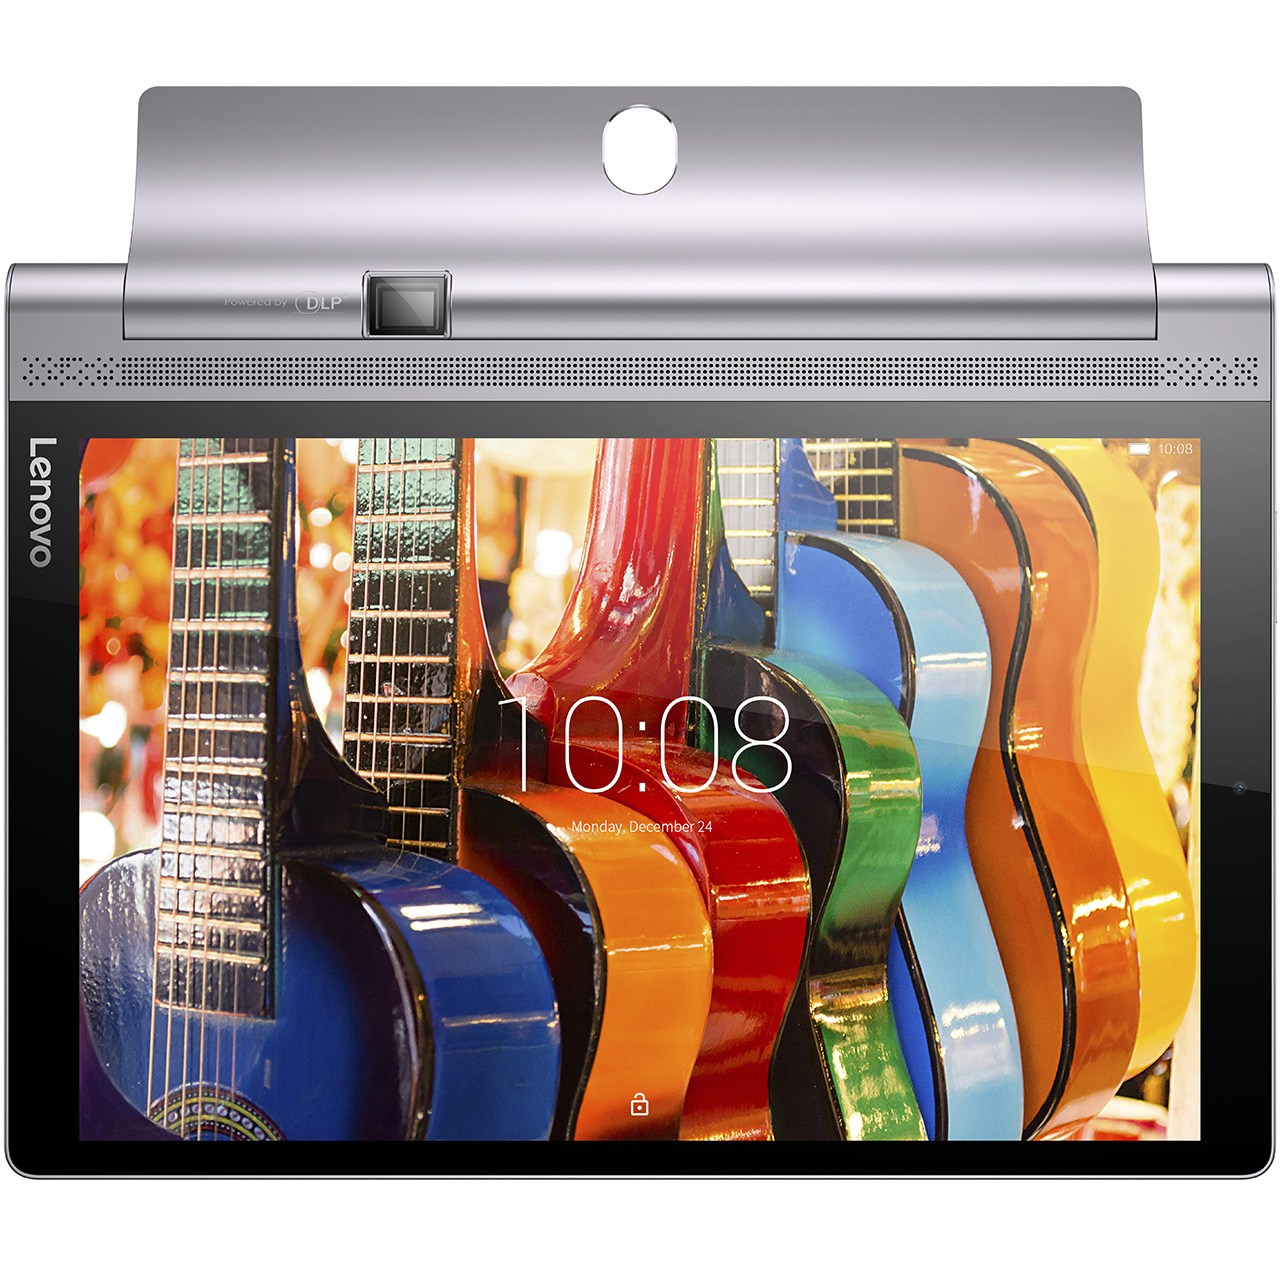 تبلت لنوو مدل Yoga Tab 3 Pro YT3-X90L ظرفیت 32 گیگابایت